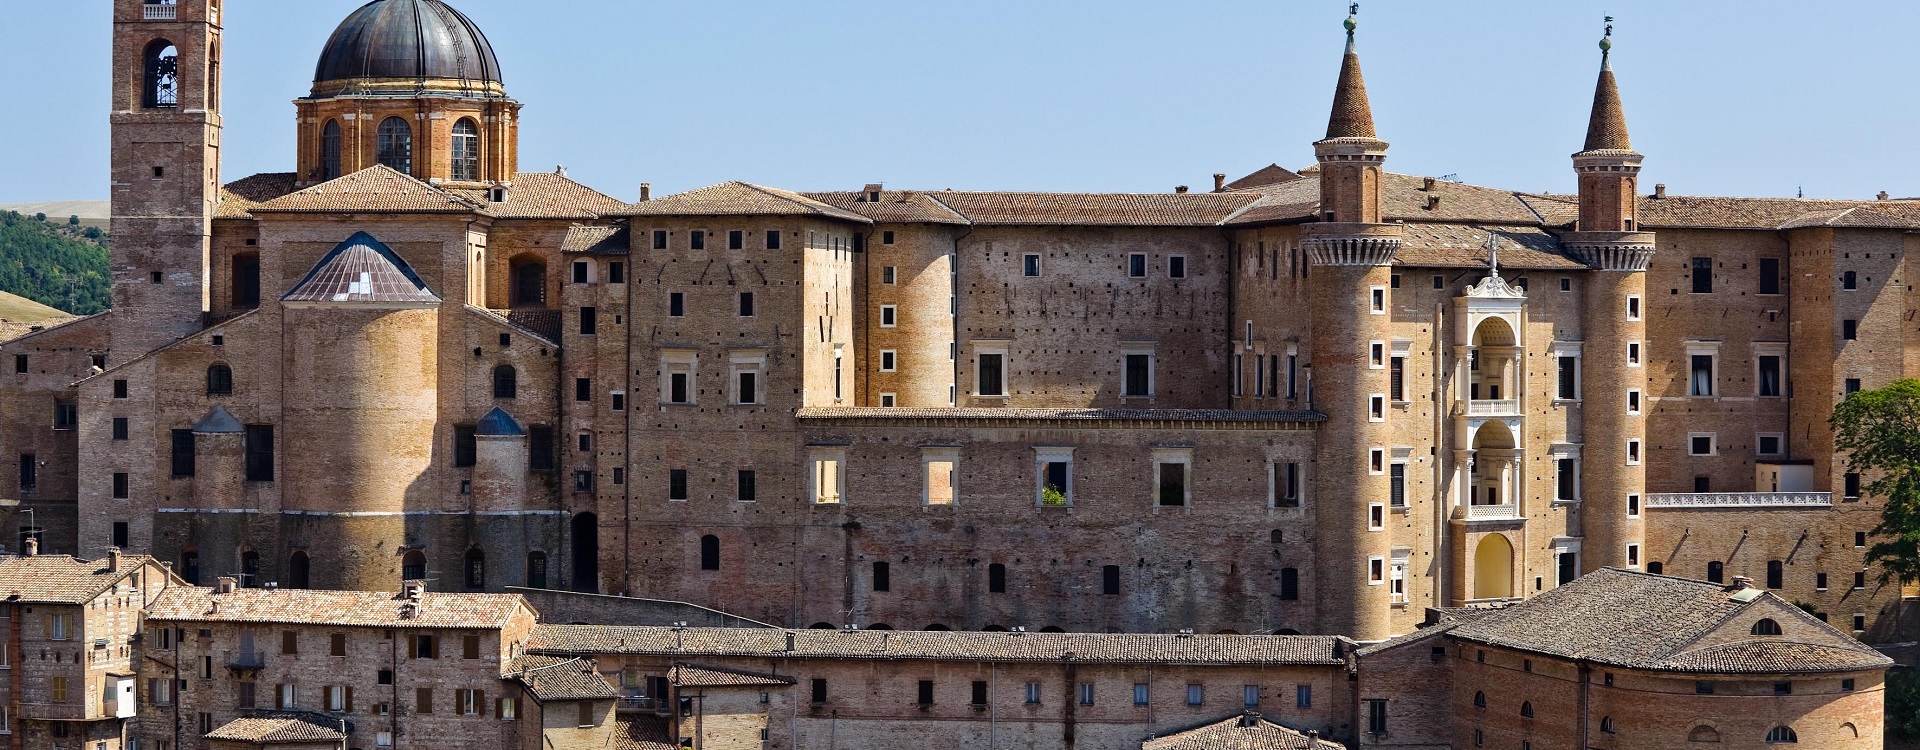 Palazzo Ducale Urbino Ducale